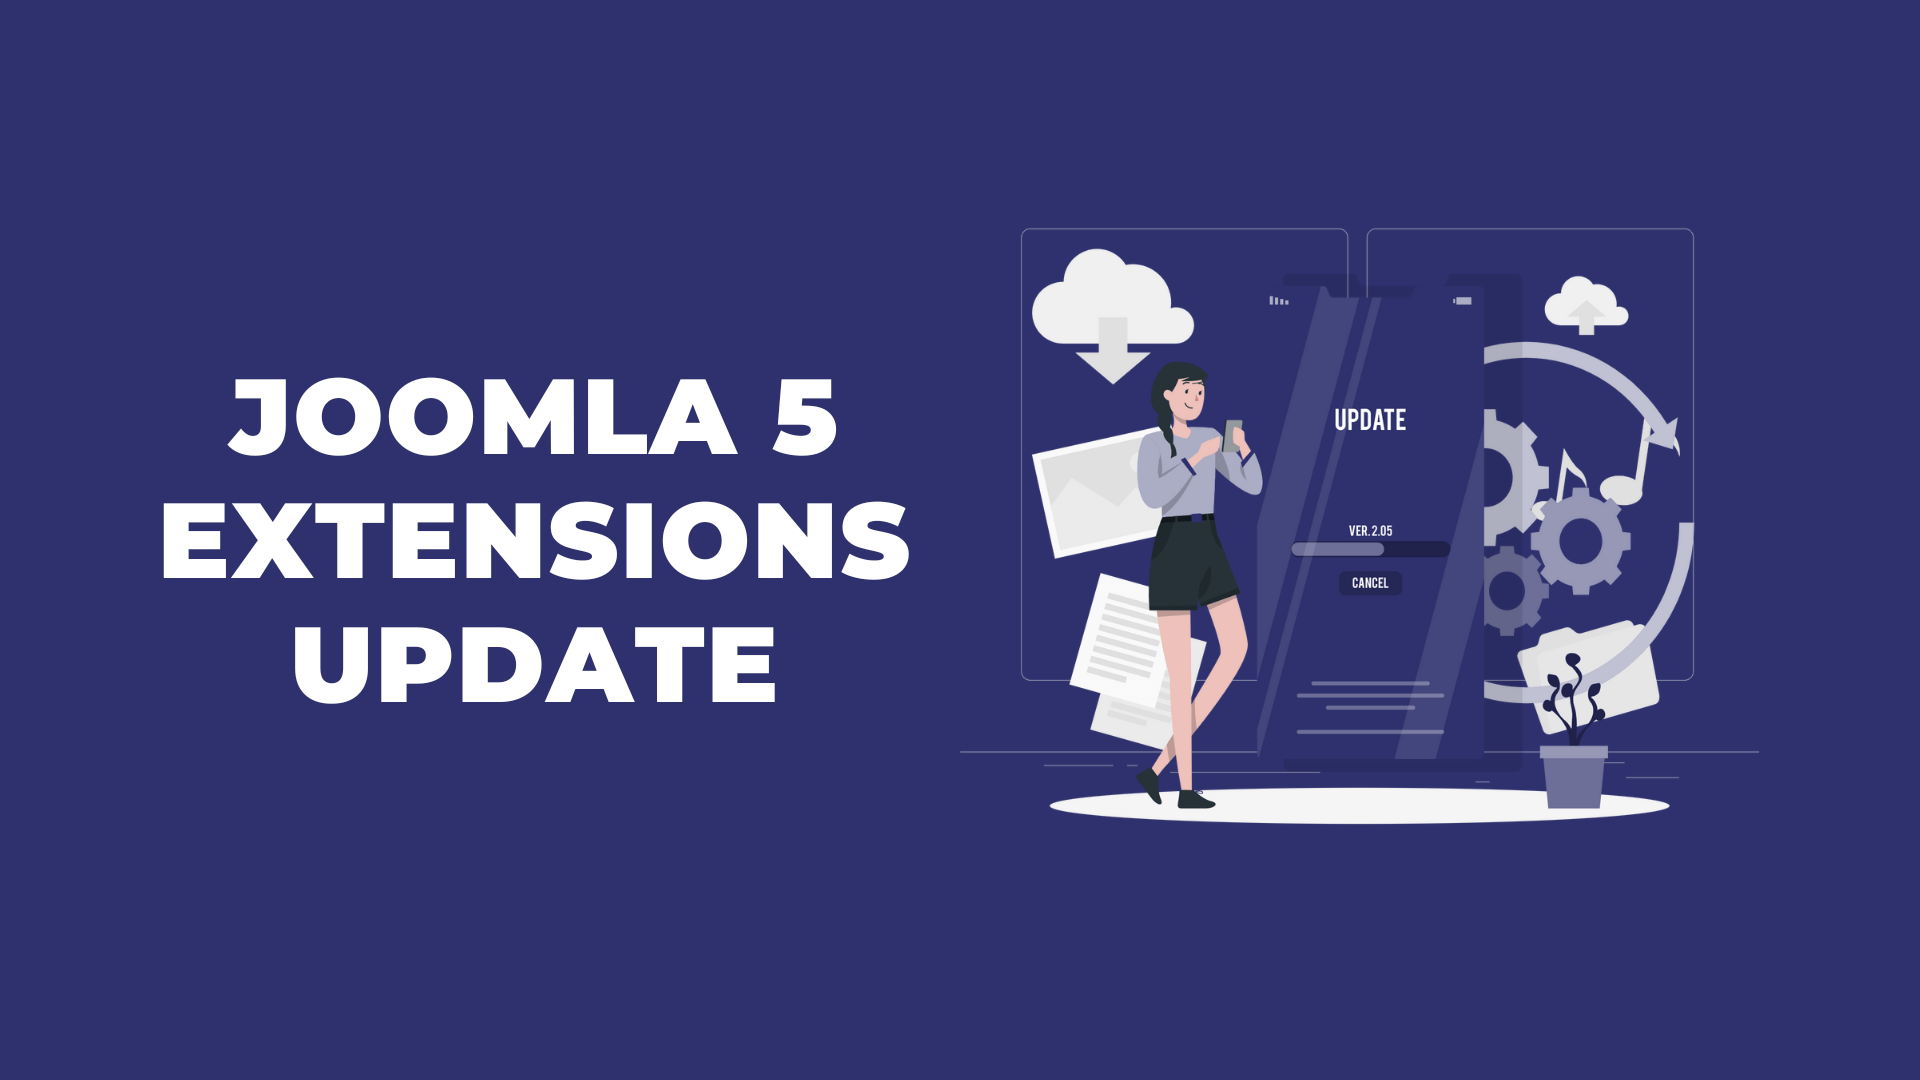 ordasoft Joomla News: Joomla Extensions Update to Joomla 5